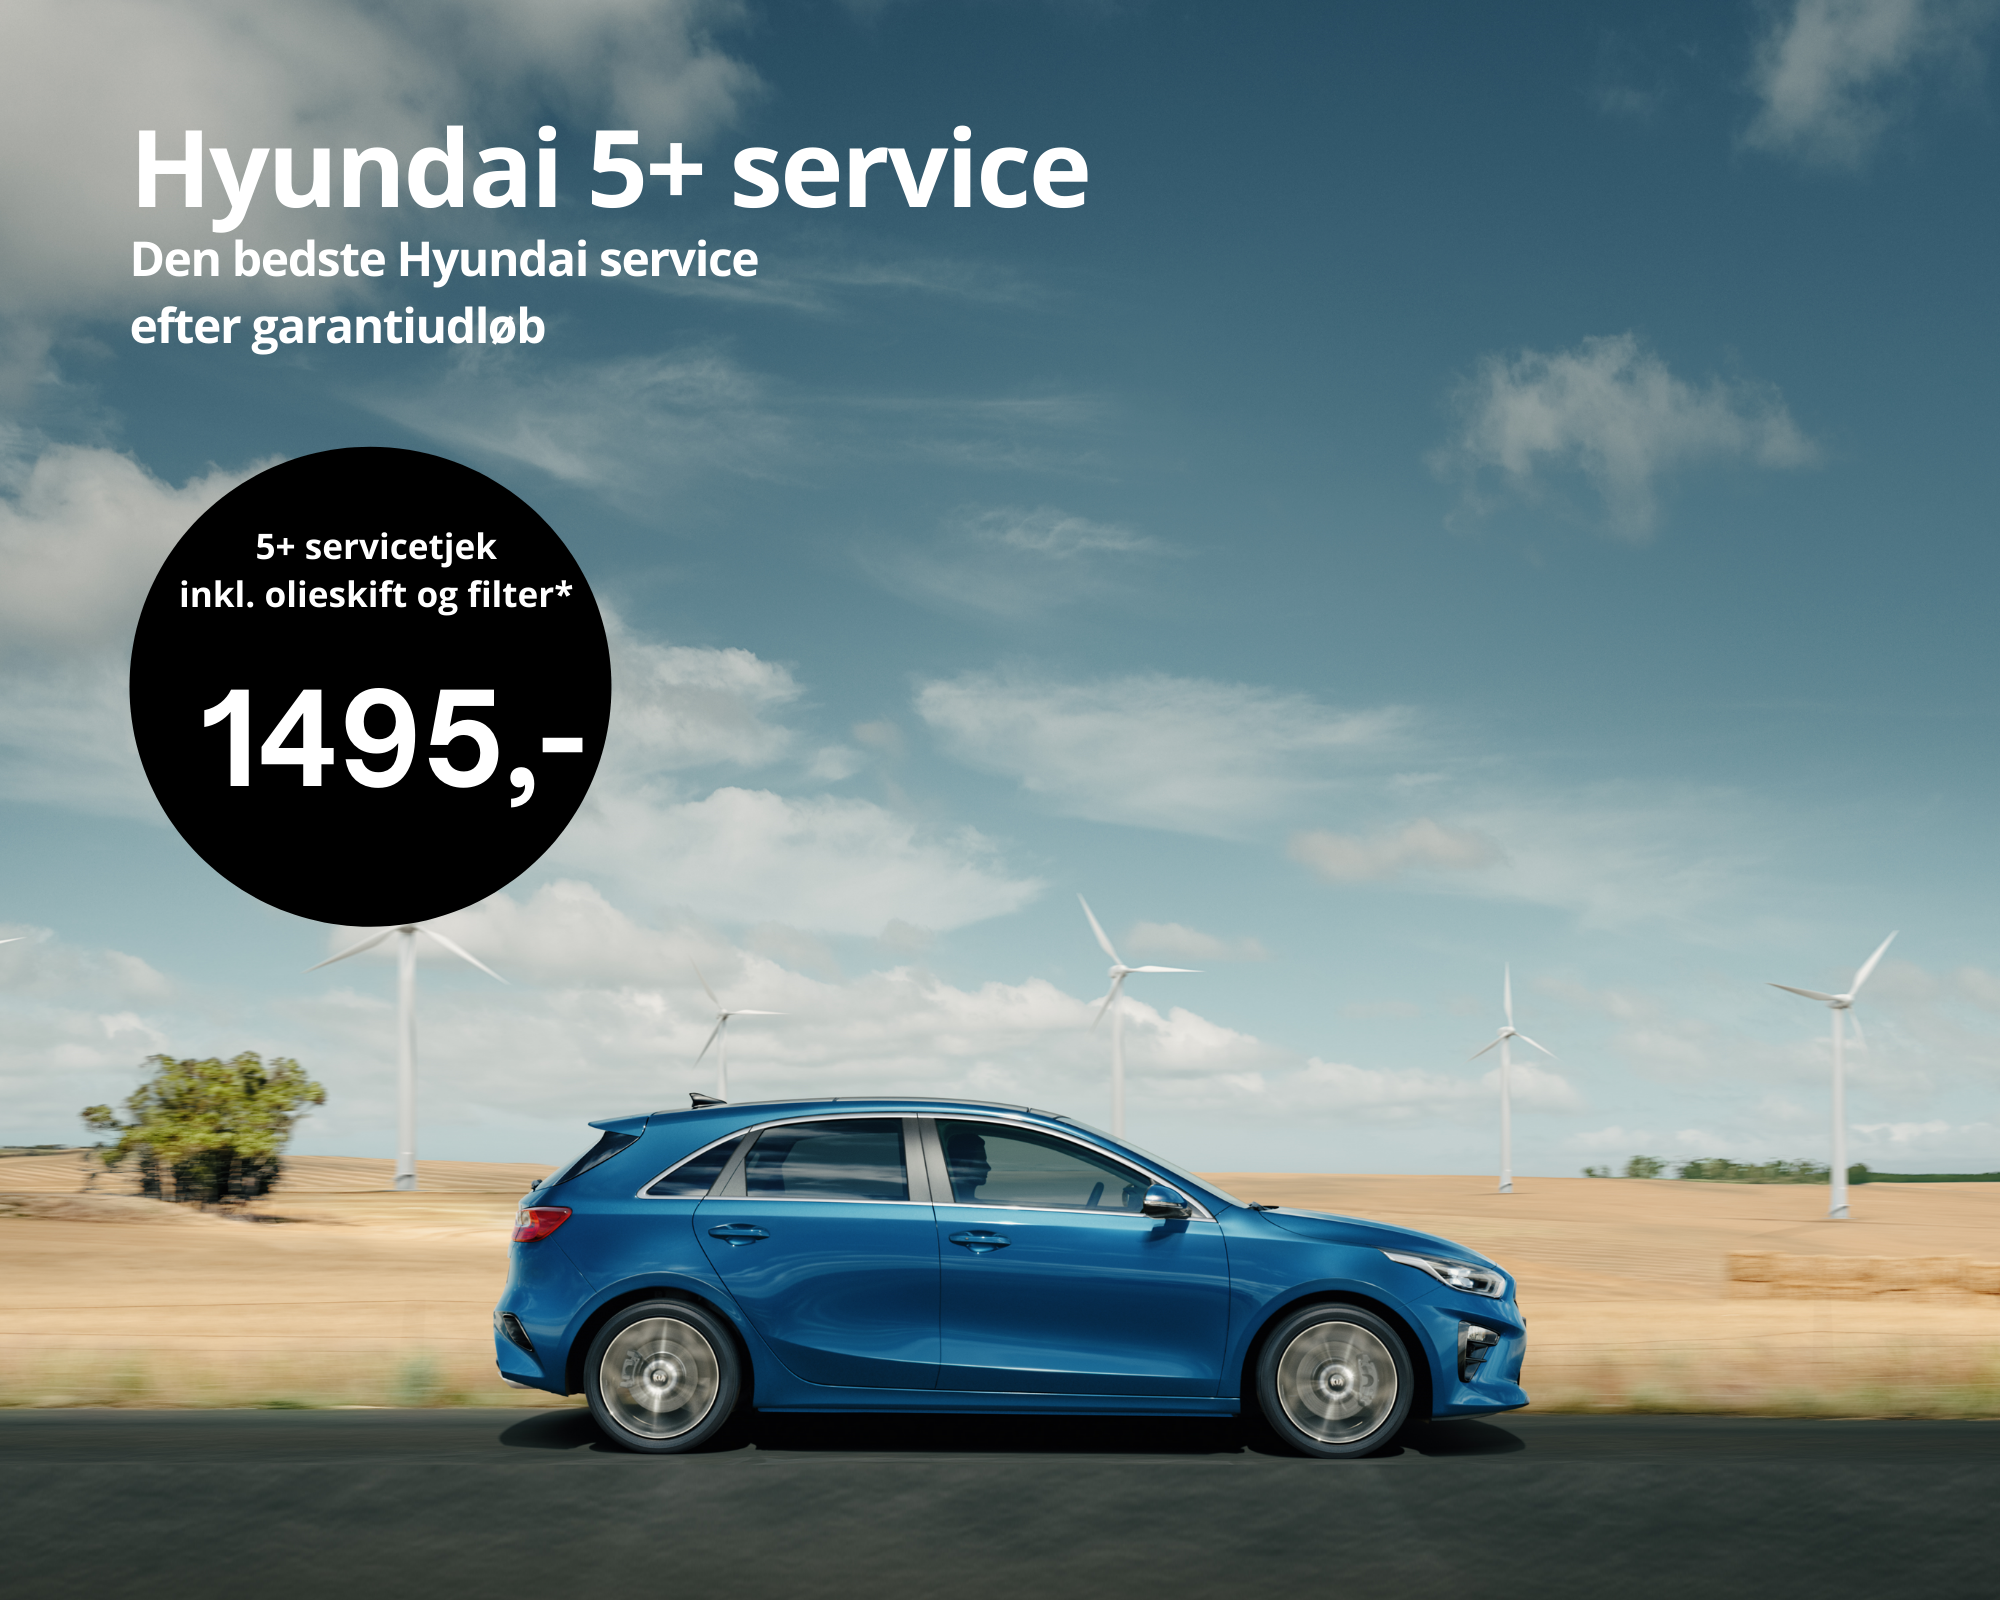 Hyundai 5+ service basisservice blå bil | Bilscenen Esbjerg | Autoriseret Kia & Hyundai værksted